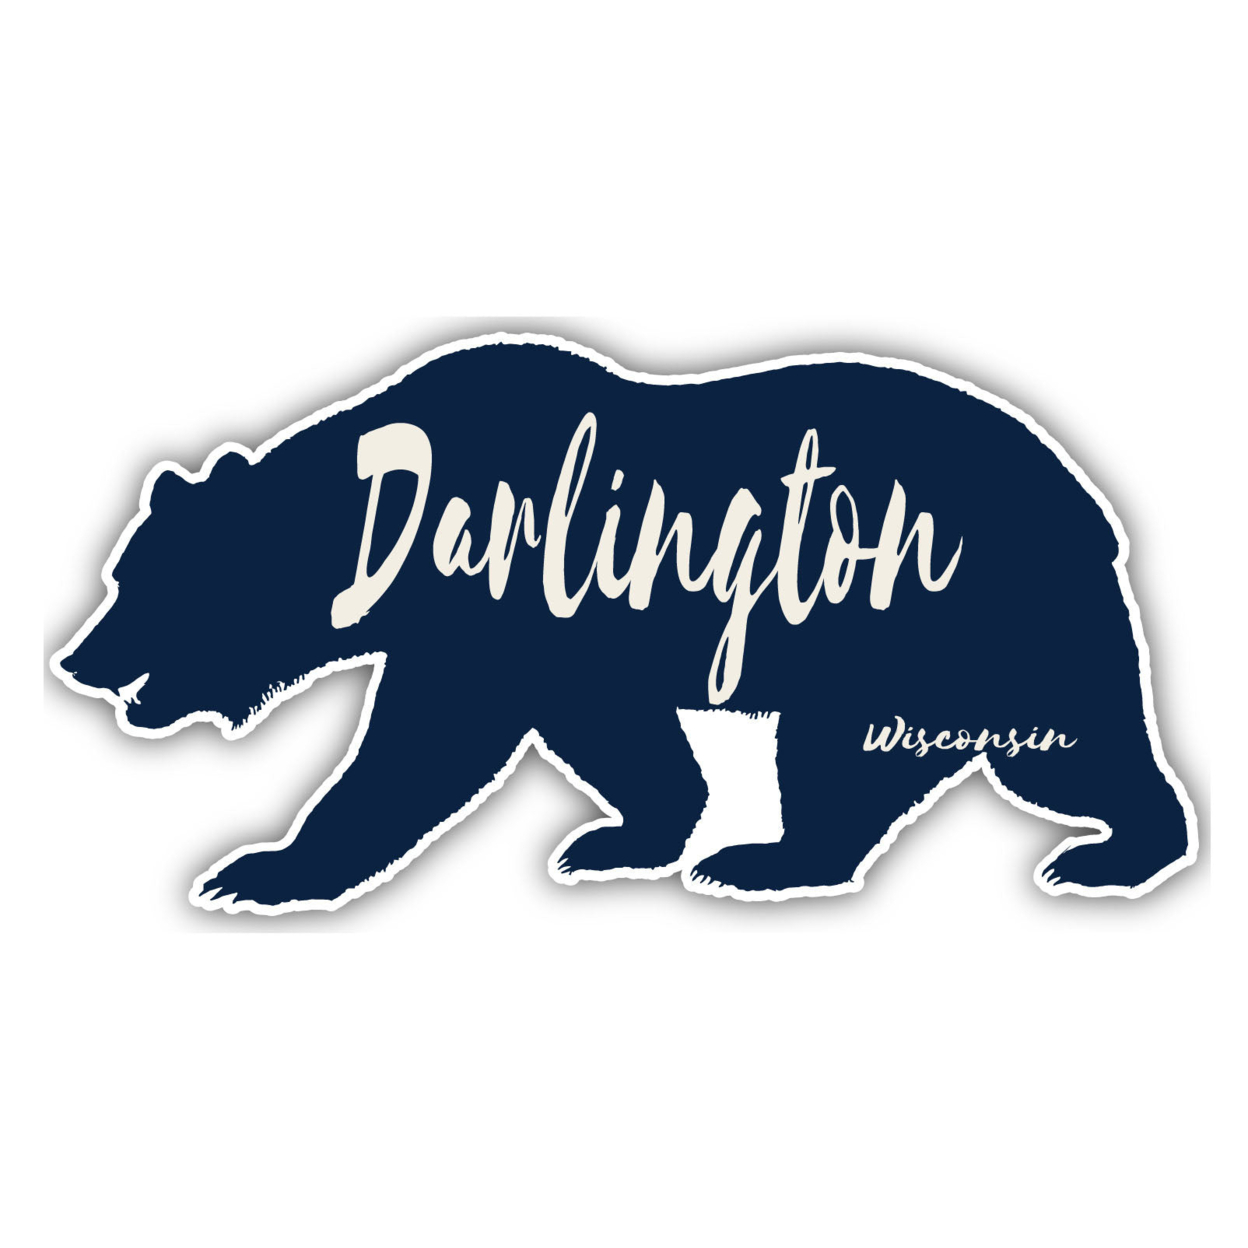 Darlington Wisconsin Souvenir Decorative Stickers (Choose Theme And Size) - Single Unit, 12-Inch, Bear